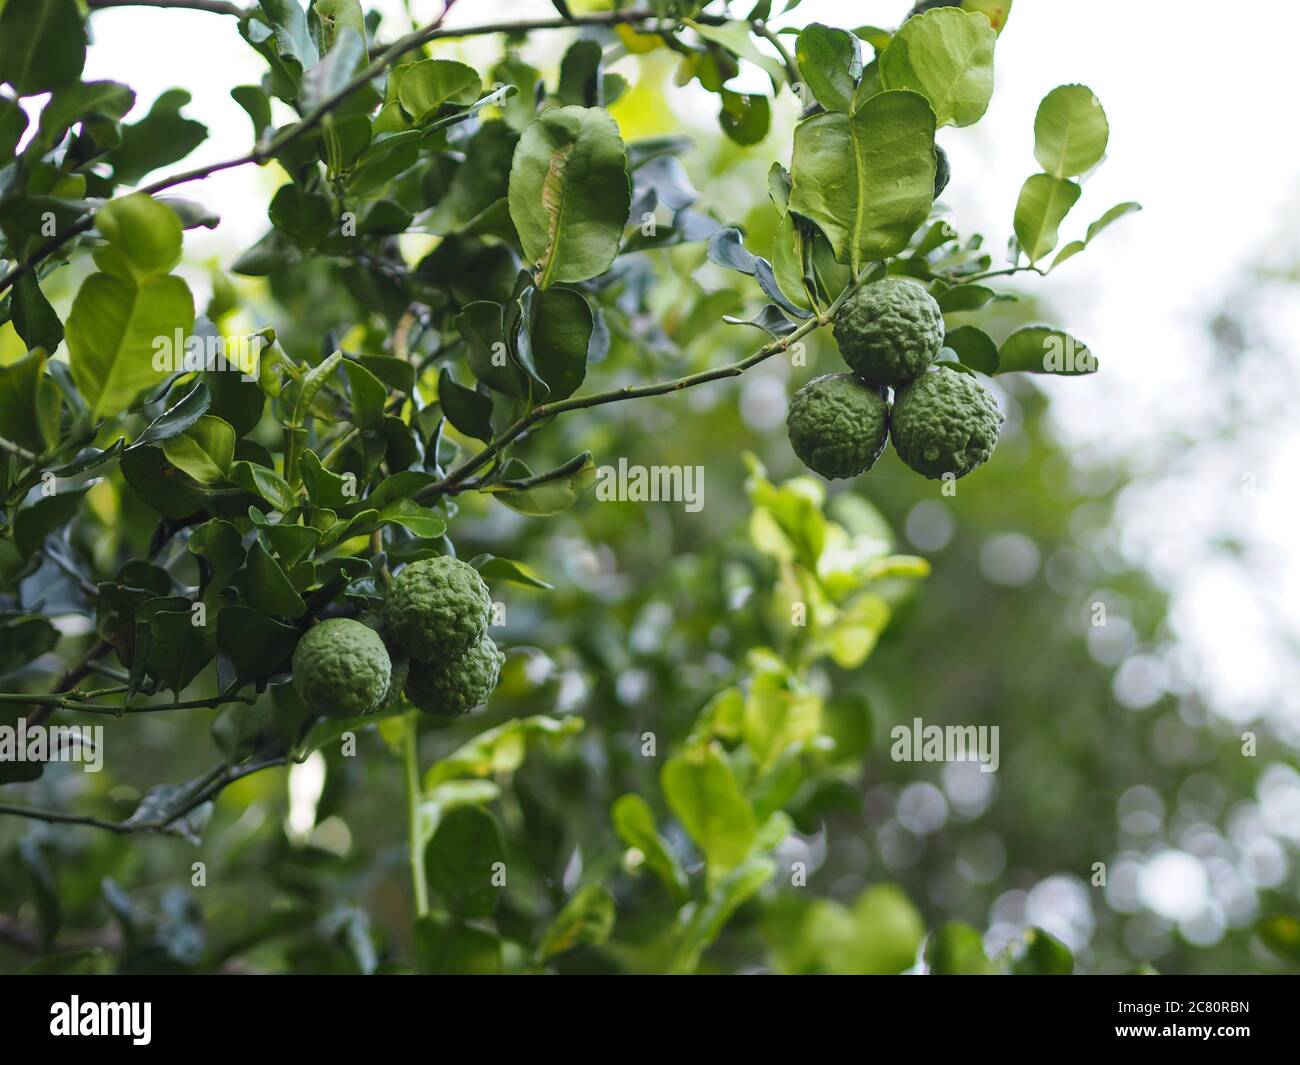 kaffir lime, Leech Lime Citrus hystrix DC Scientific name rough skin green vegetable on tree in garden nature background Stock Photo